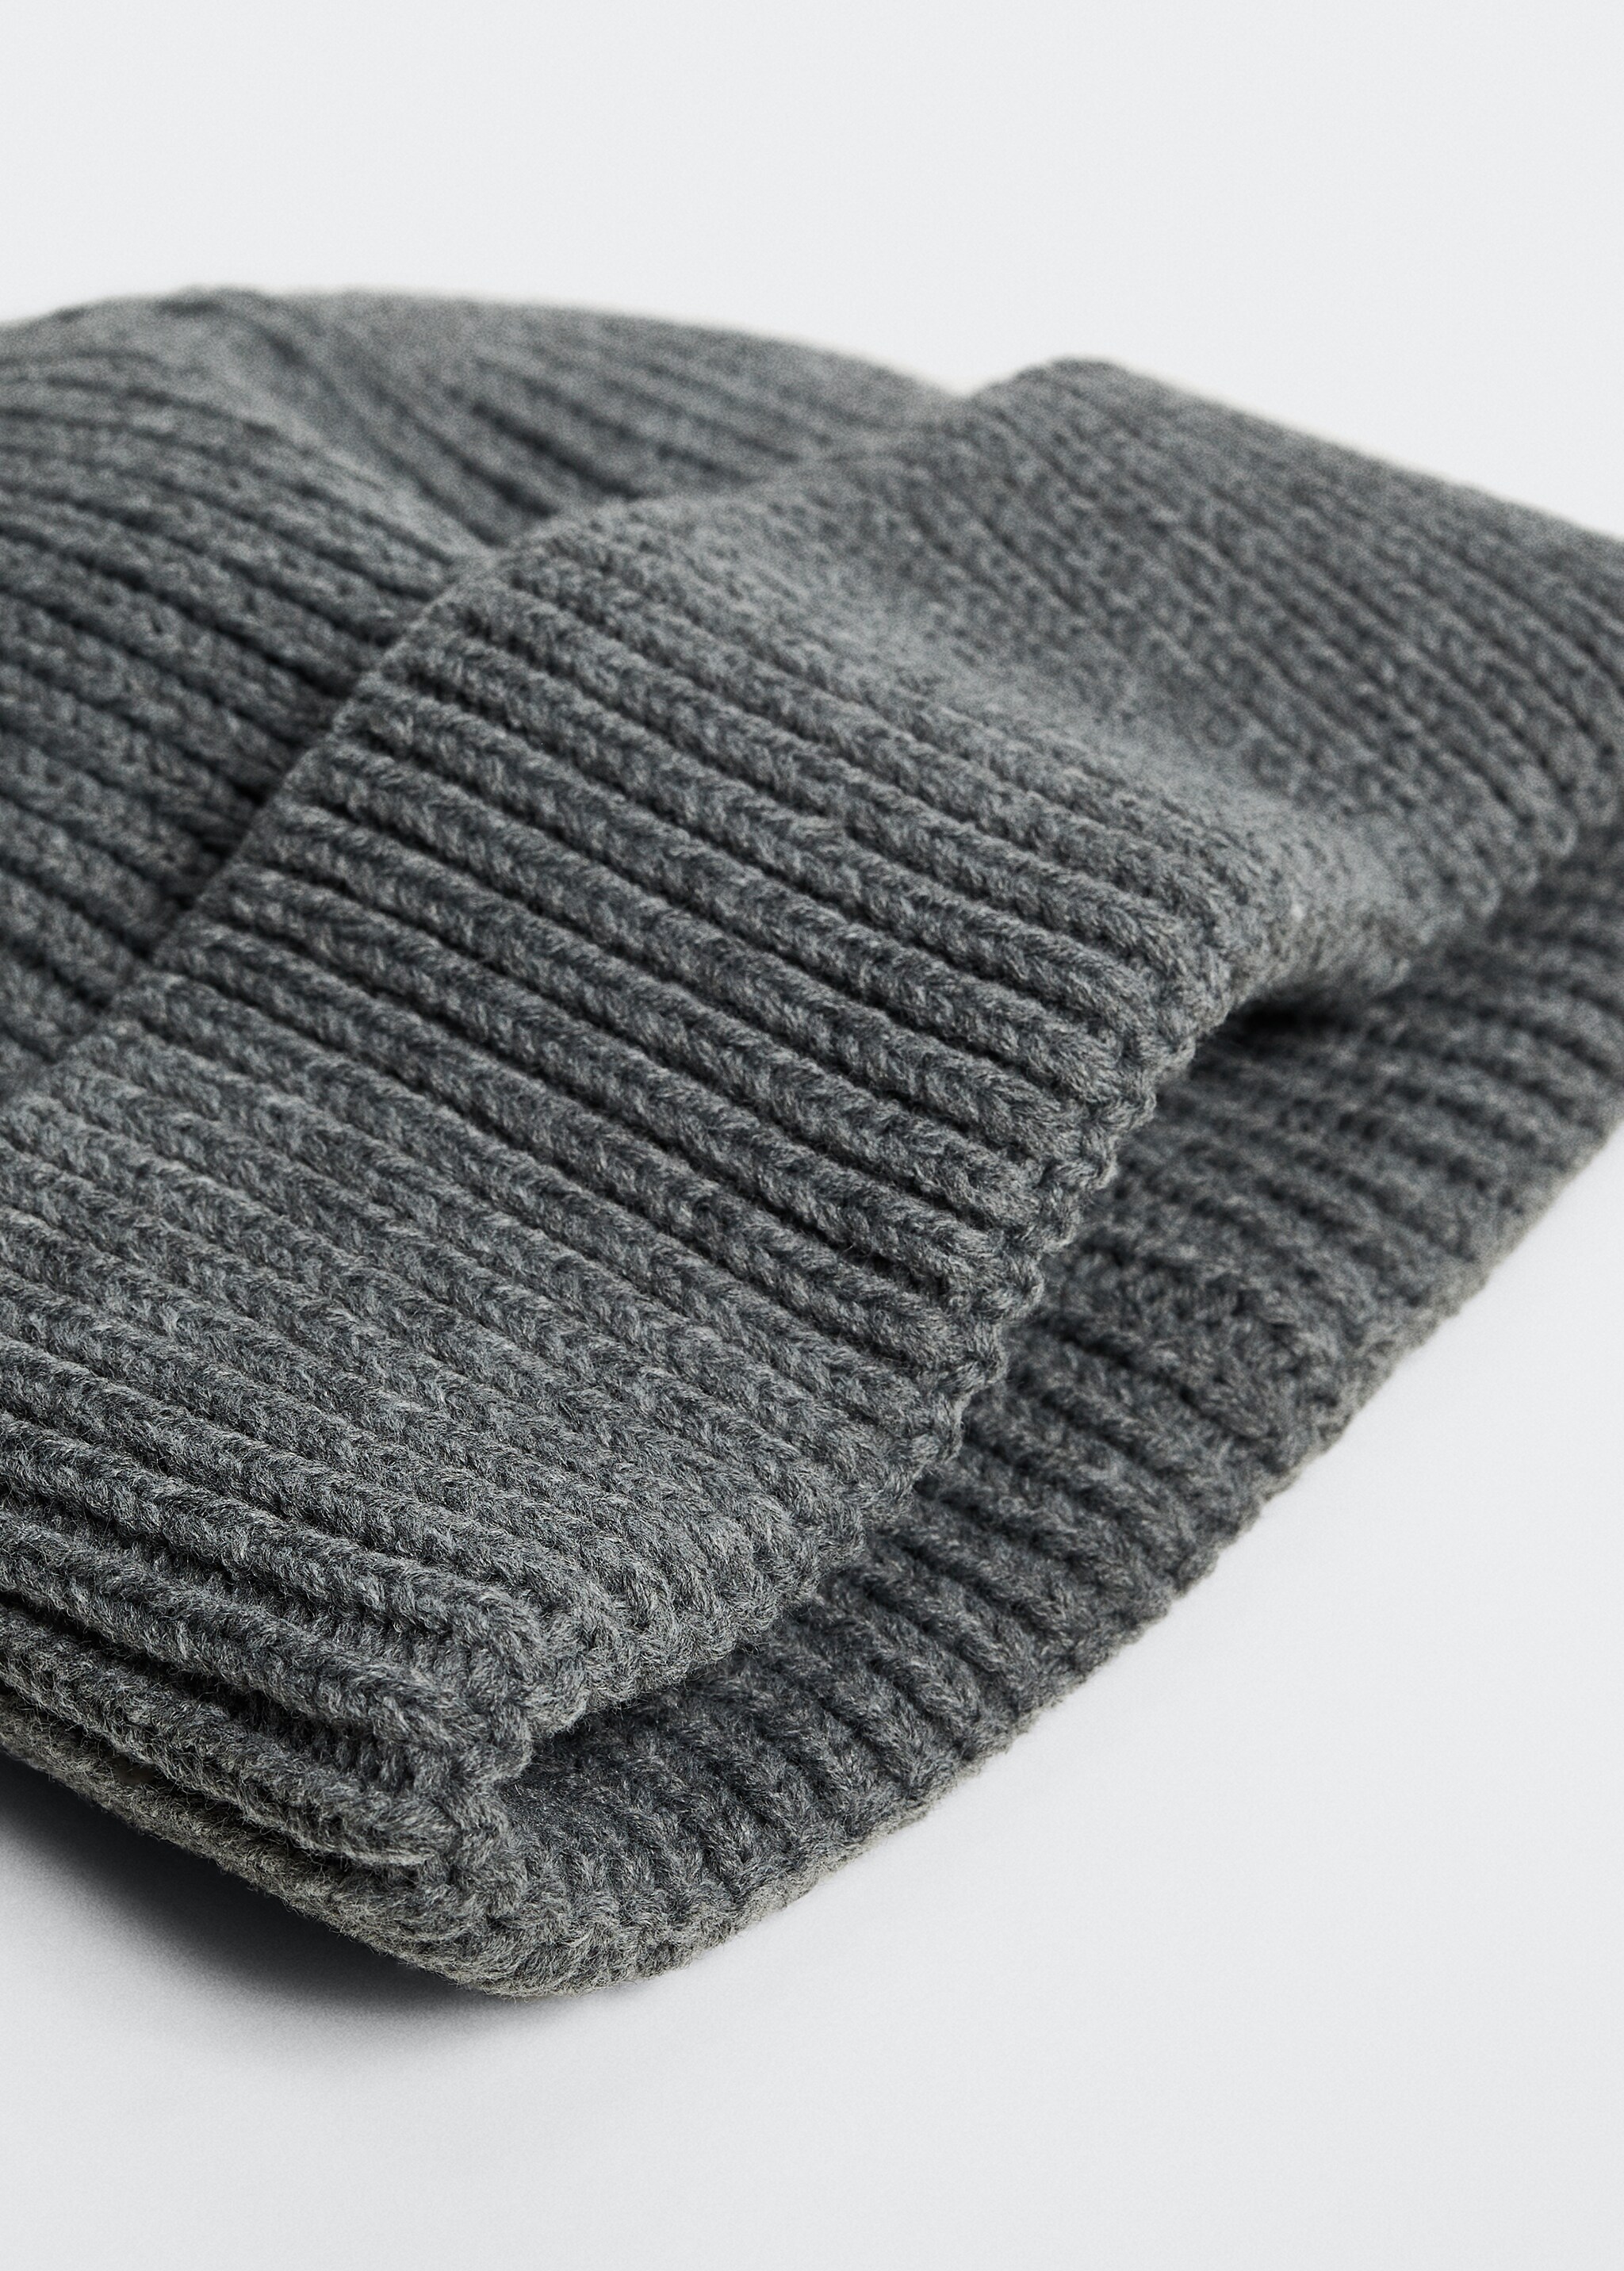 Short knitted hat - Medium plane